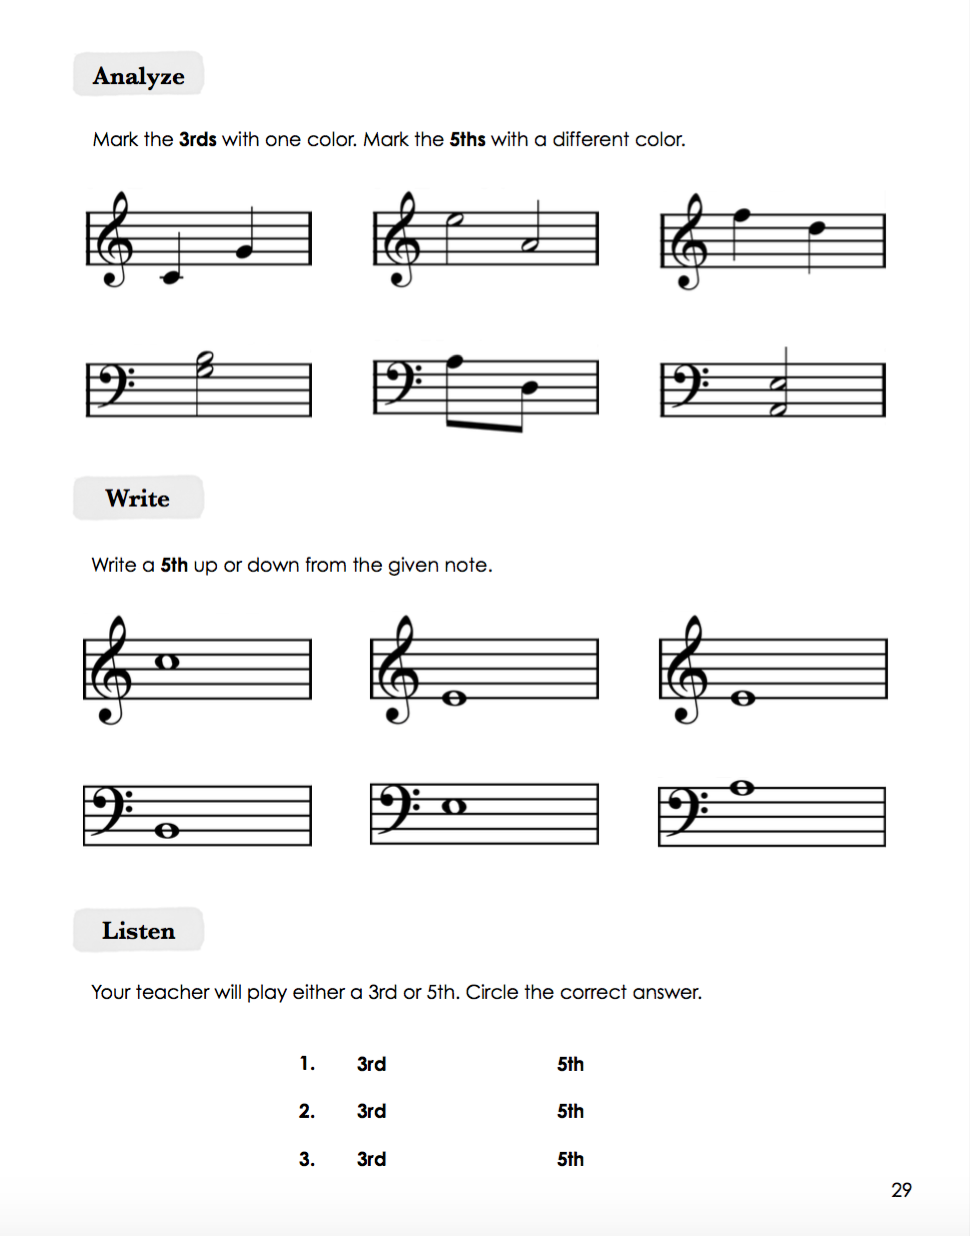 Piano Safari Livro de Teoria 2 | Piano Safari Method | THEORY BOOK LEVEL 2 PIANO SAFARI NIVEL 2 Livro de Teoria Musical na Loja Mineira do Músico  ((IMPORTADO - RESERVE))